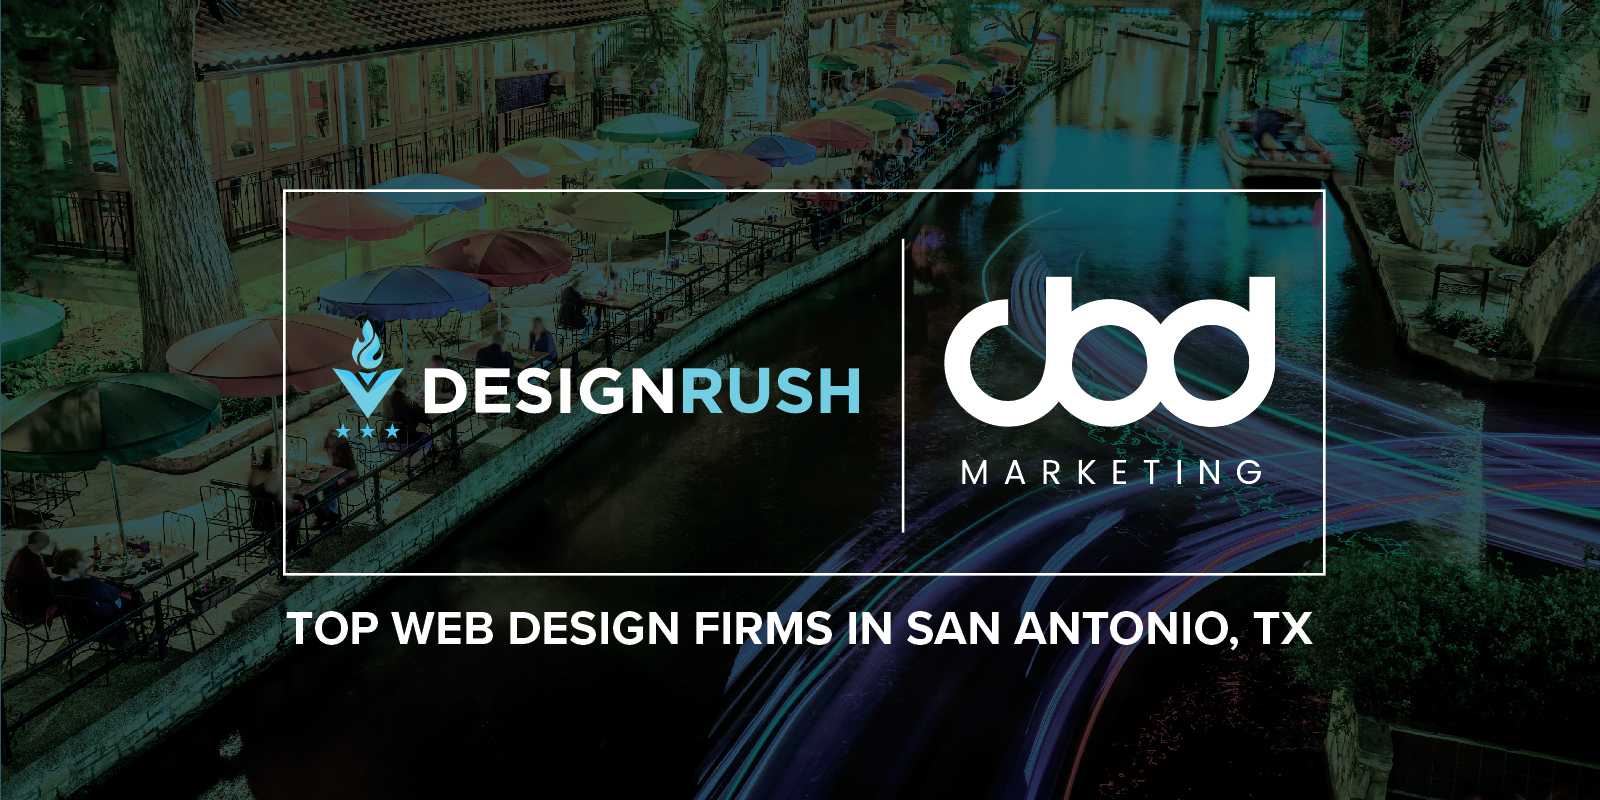 CBD Named Top Web Design Firm by DesignRush